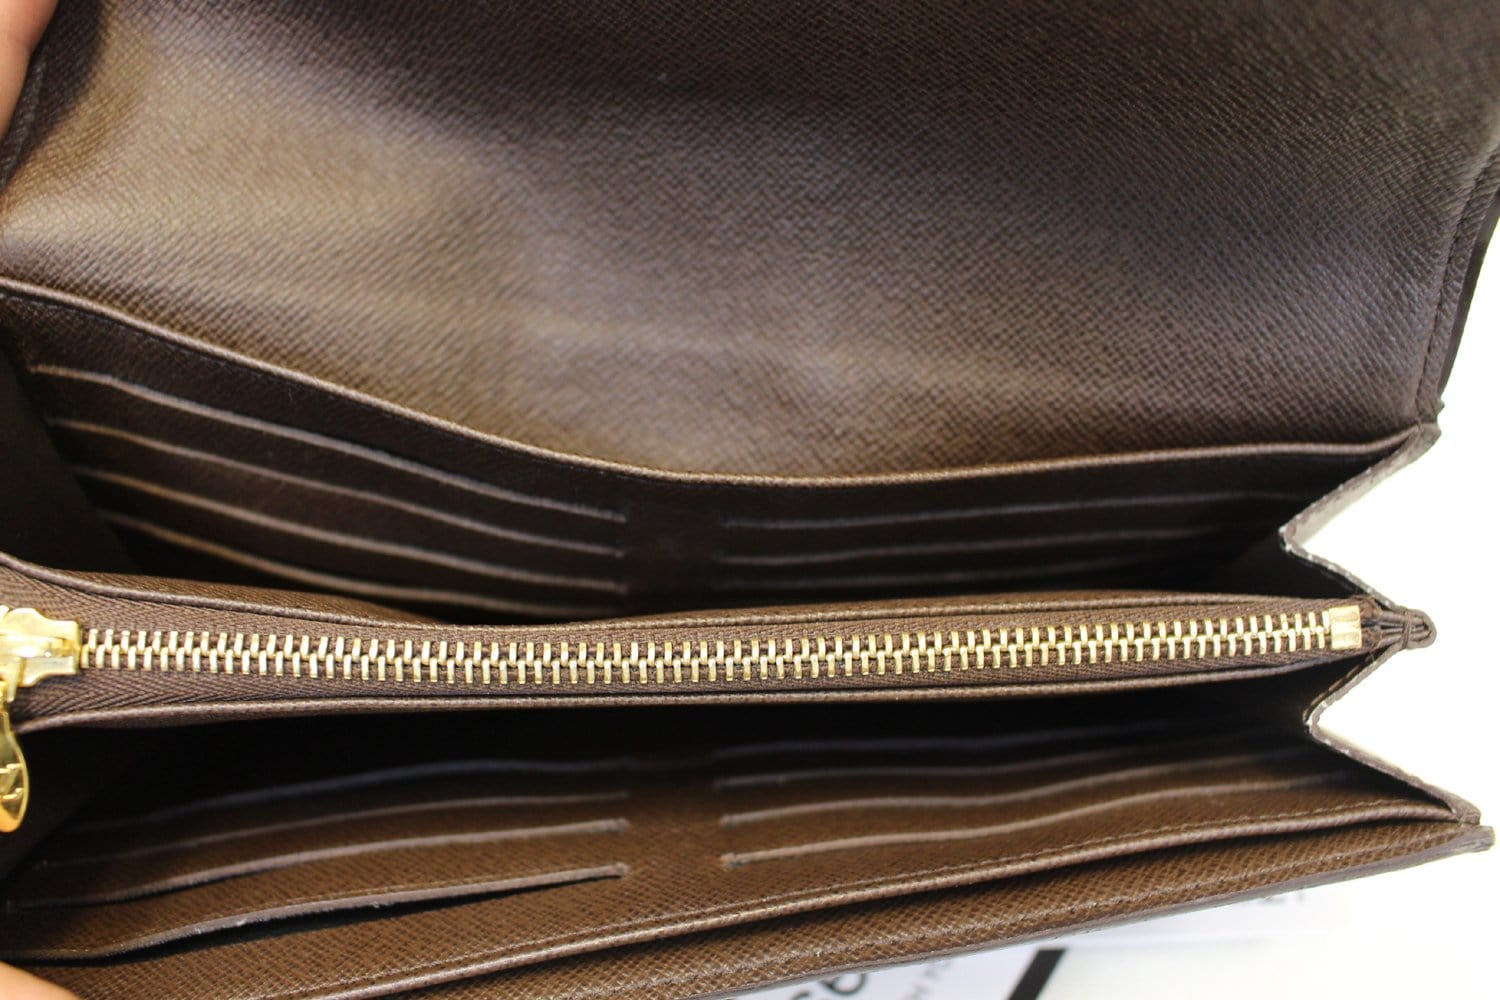 Gorgeous Authentic Louis Vuitton Damier Ebene Sistina Long Wallet w/Dustbag